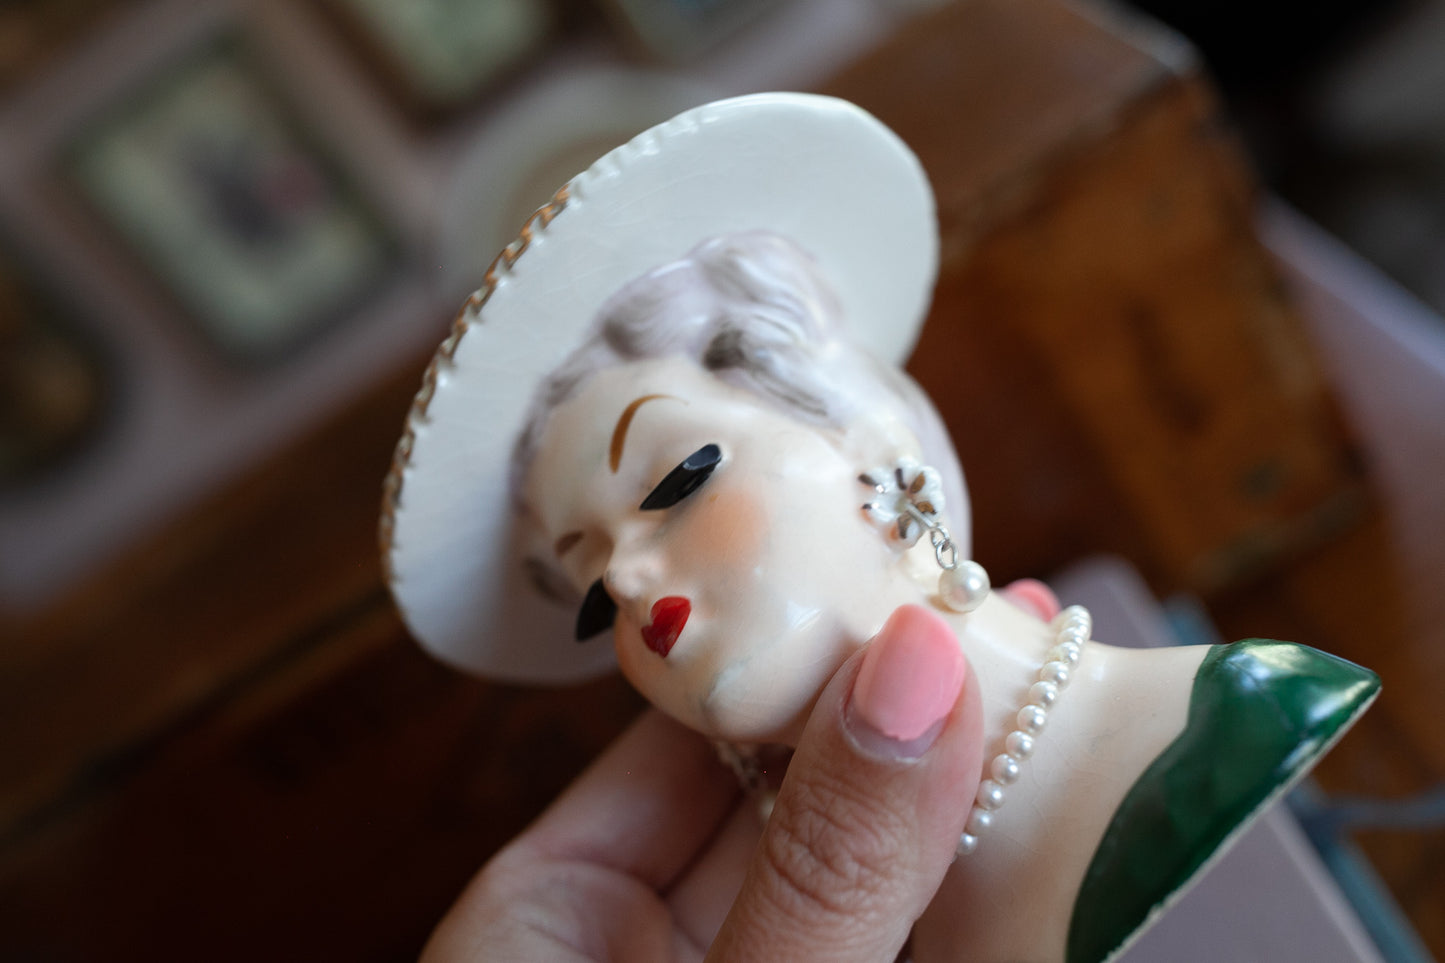 Vintage Lady Head Vase - Sonsco Hat Lady